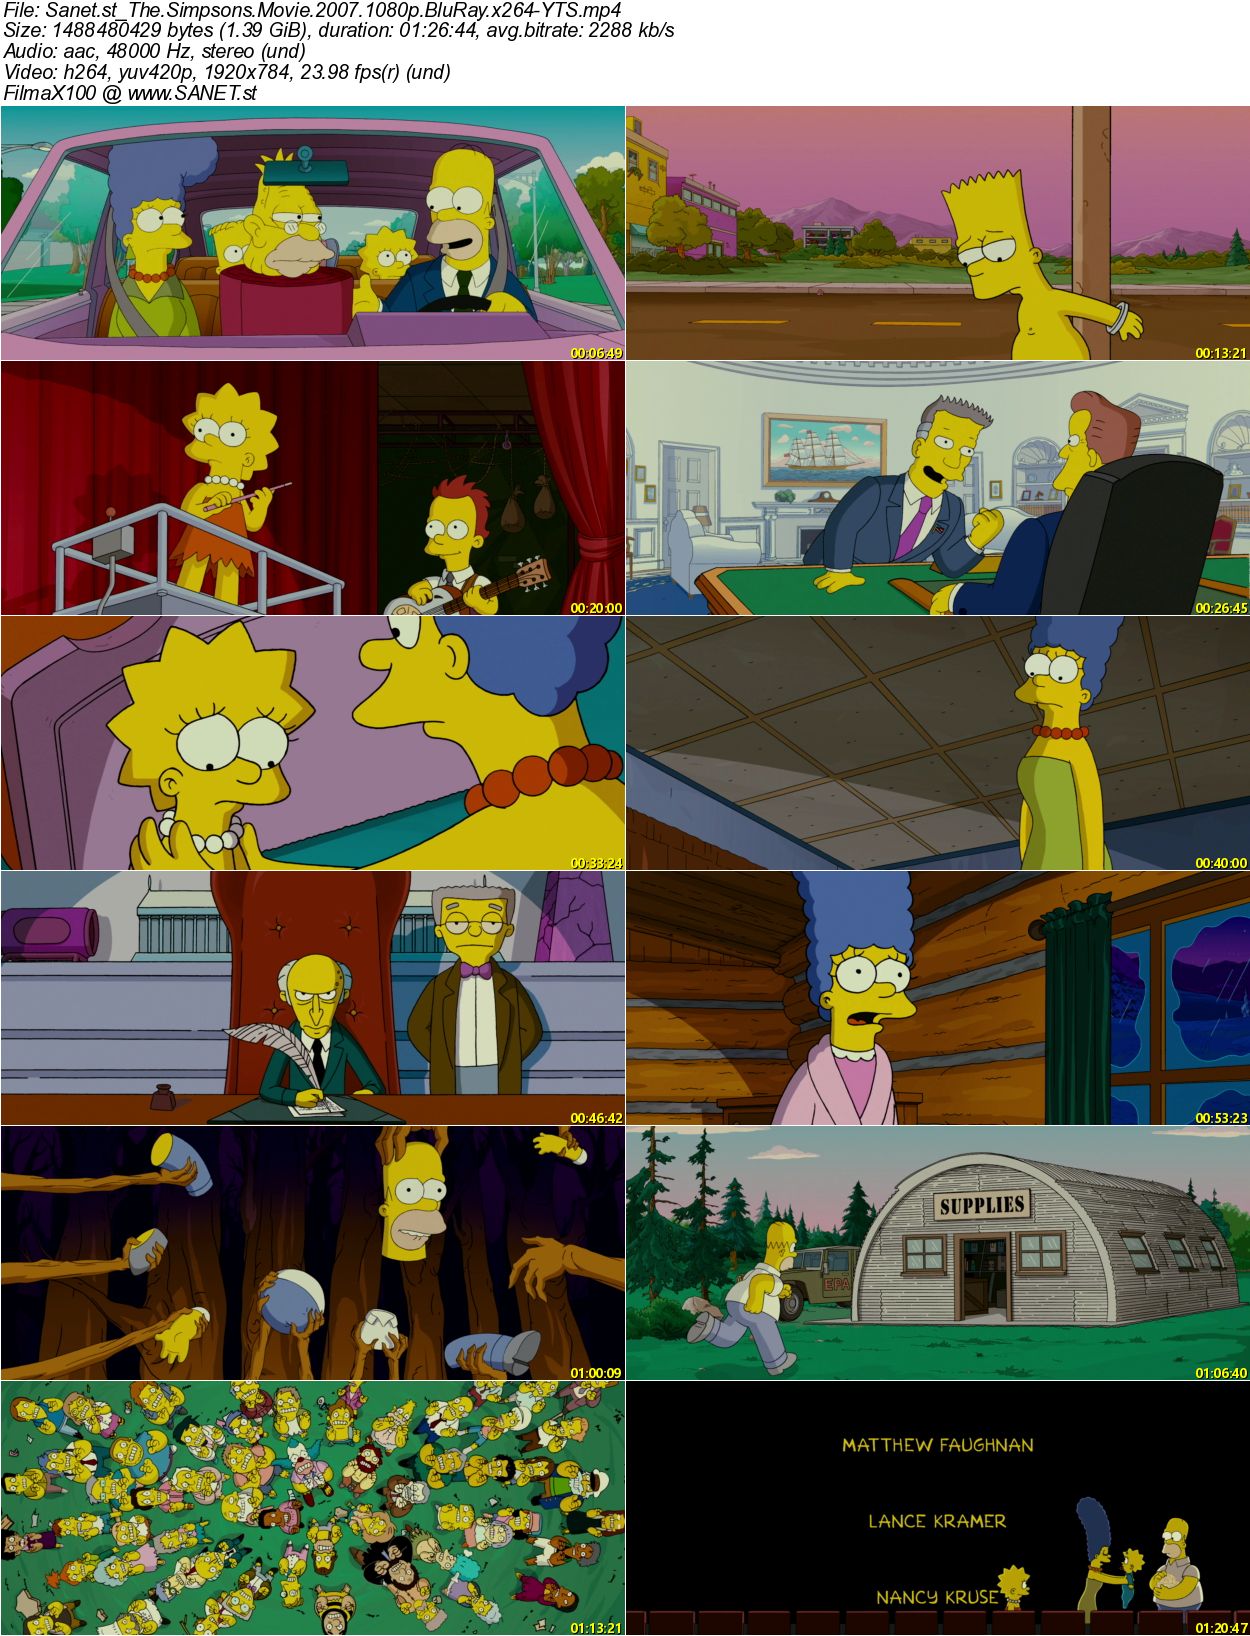 2007 The Simpsons Movie